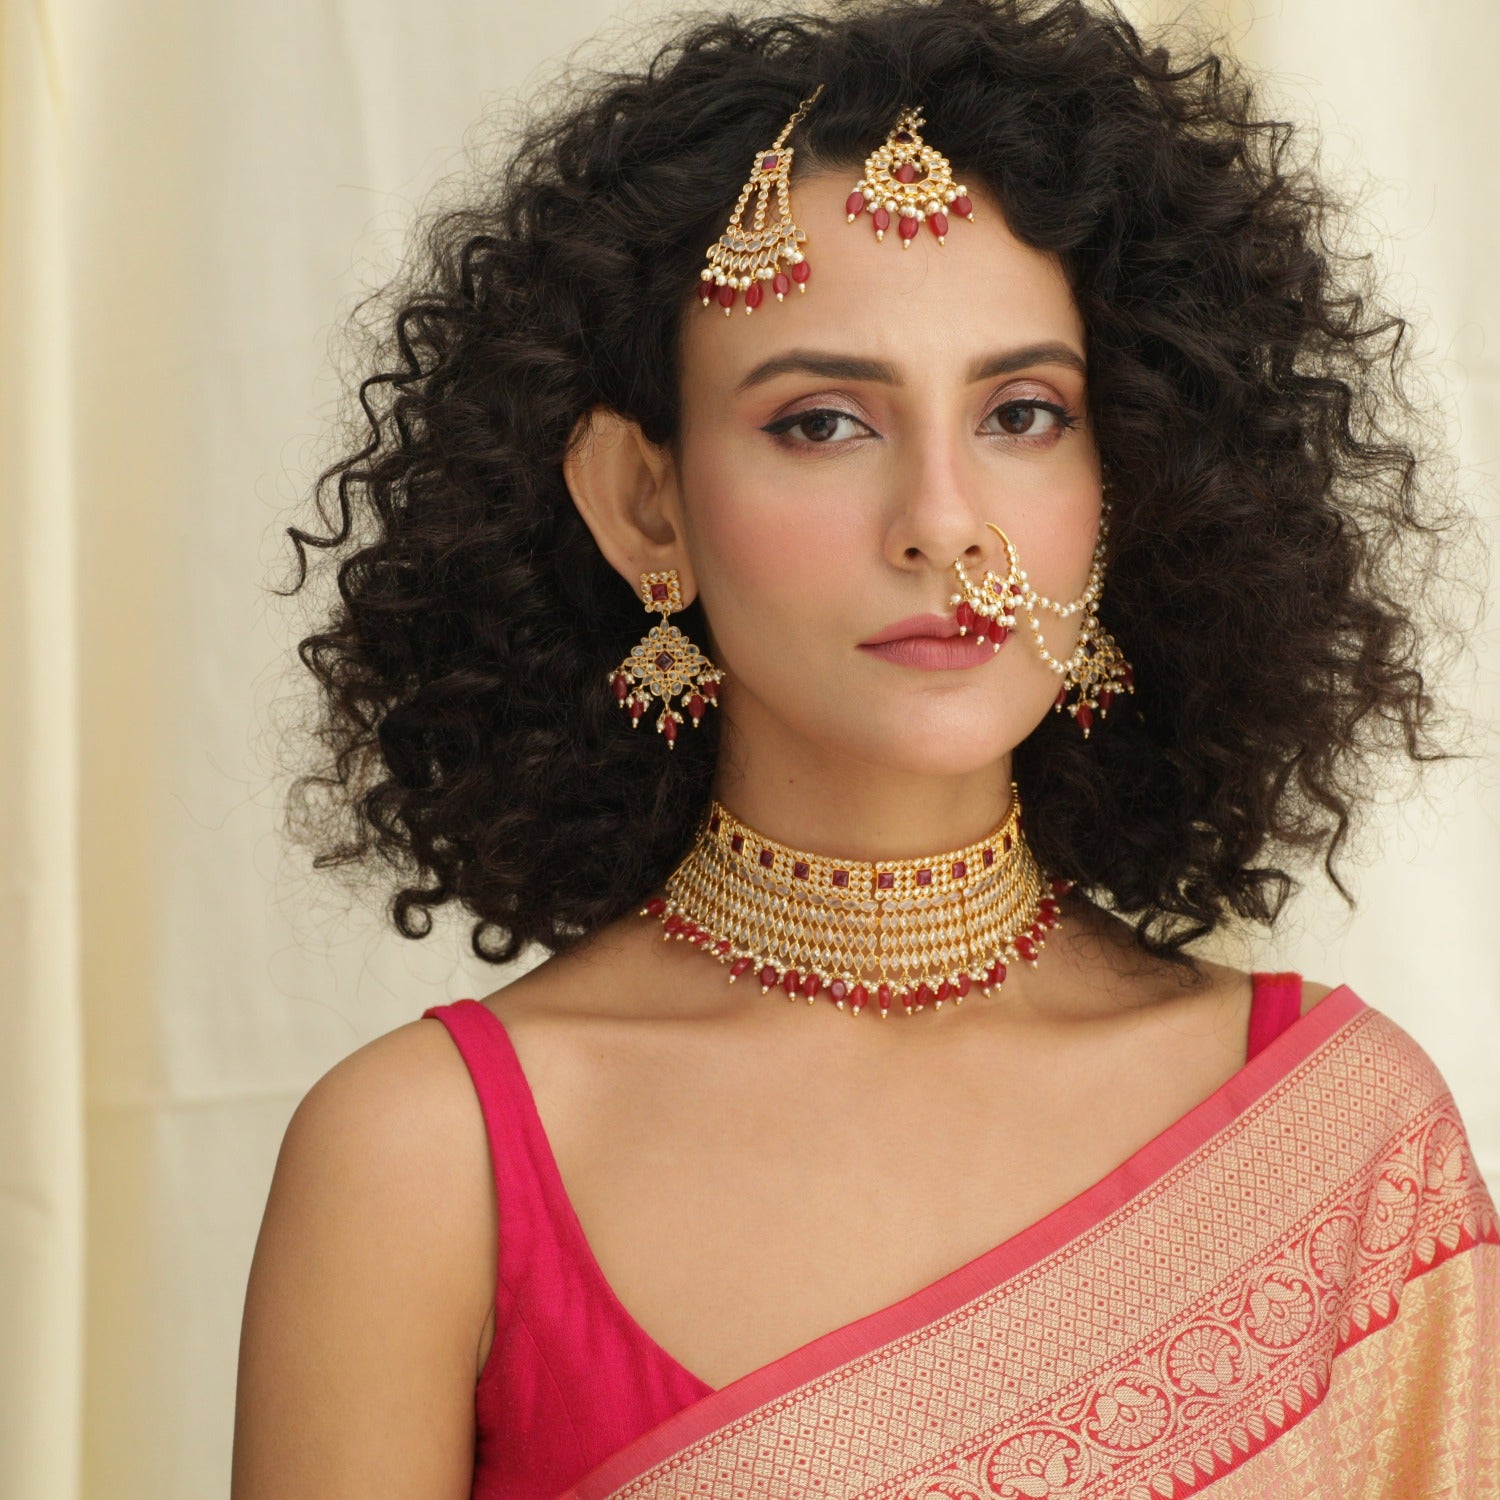 Shop Indian Bridal Wedding Jewelry Sets Online